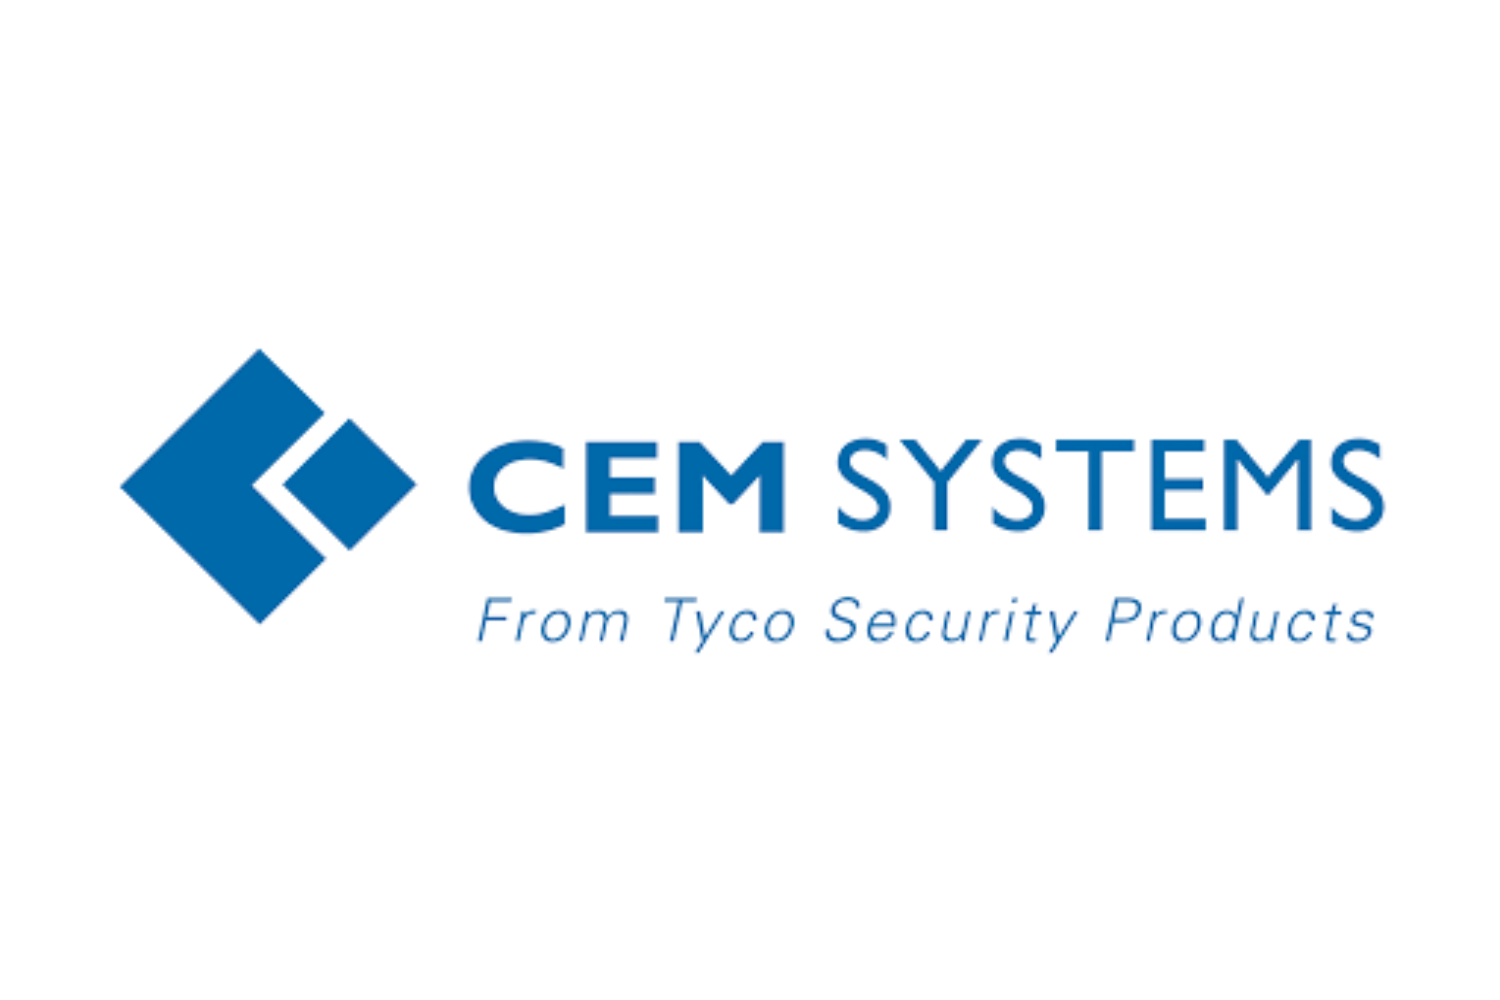 CEM Systems